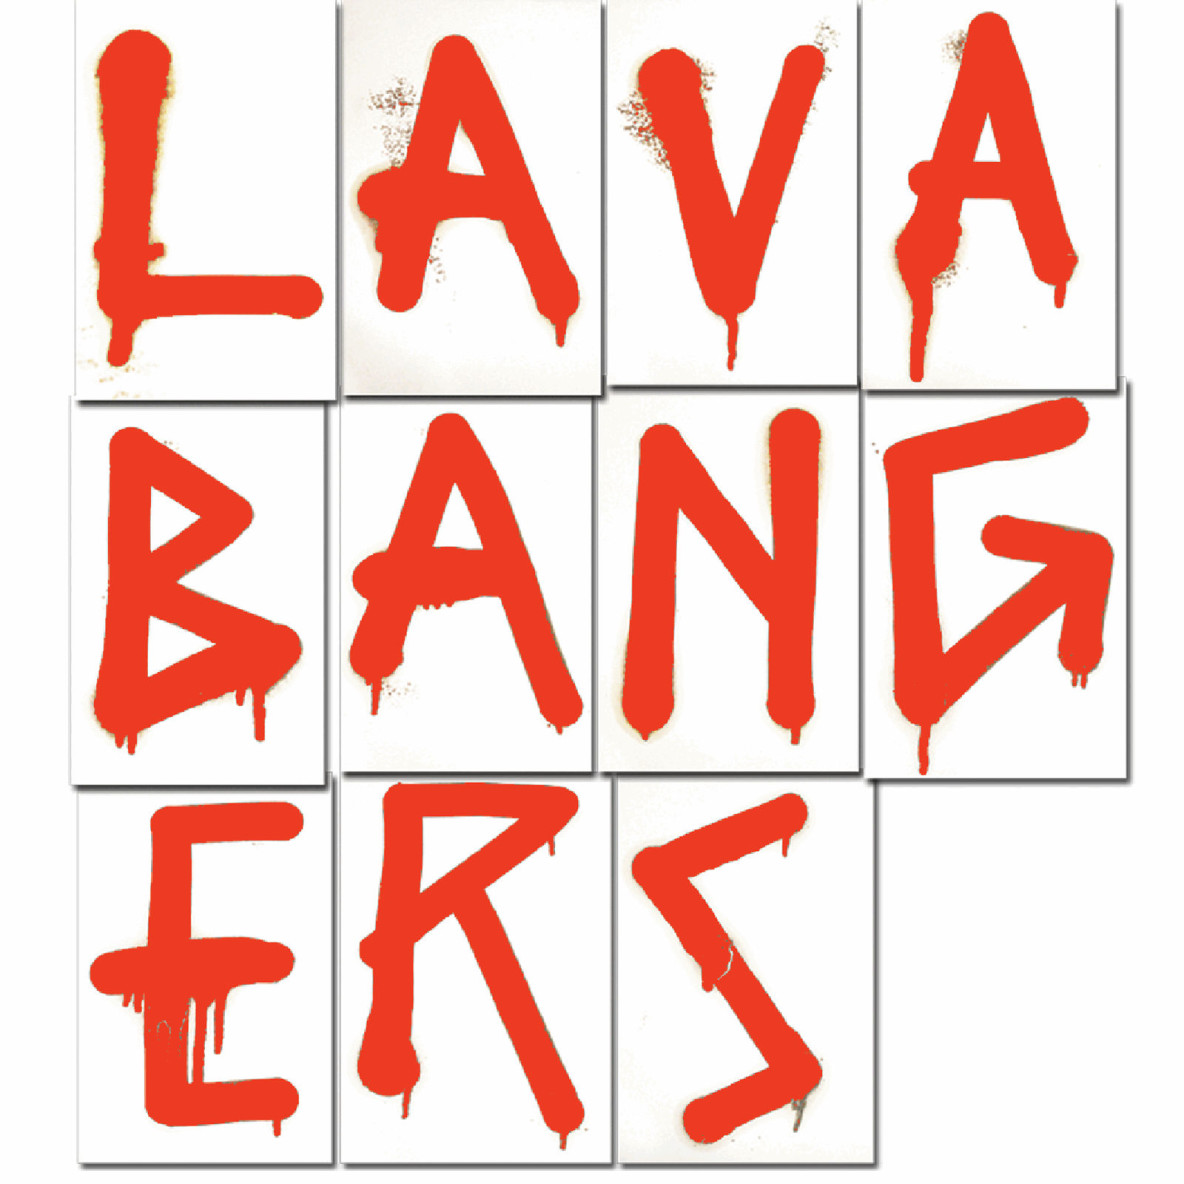 Lava Bangers by Lazerbeak